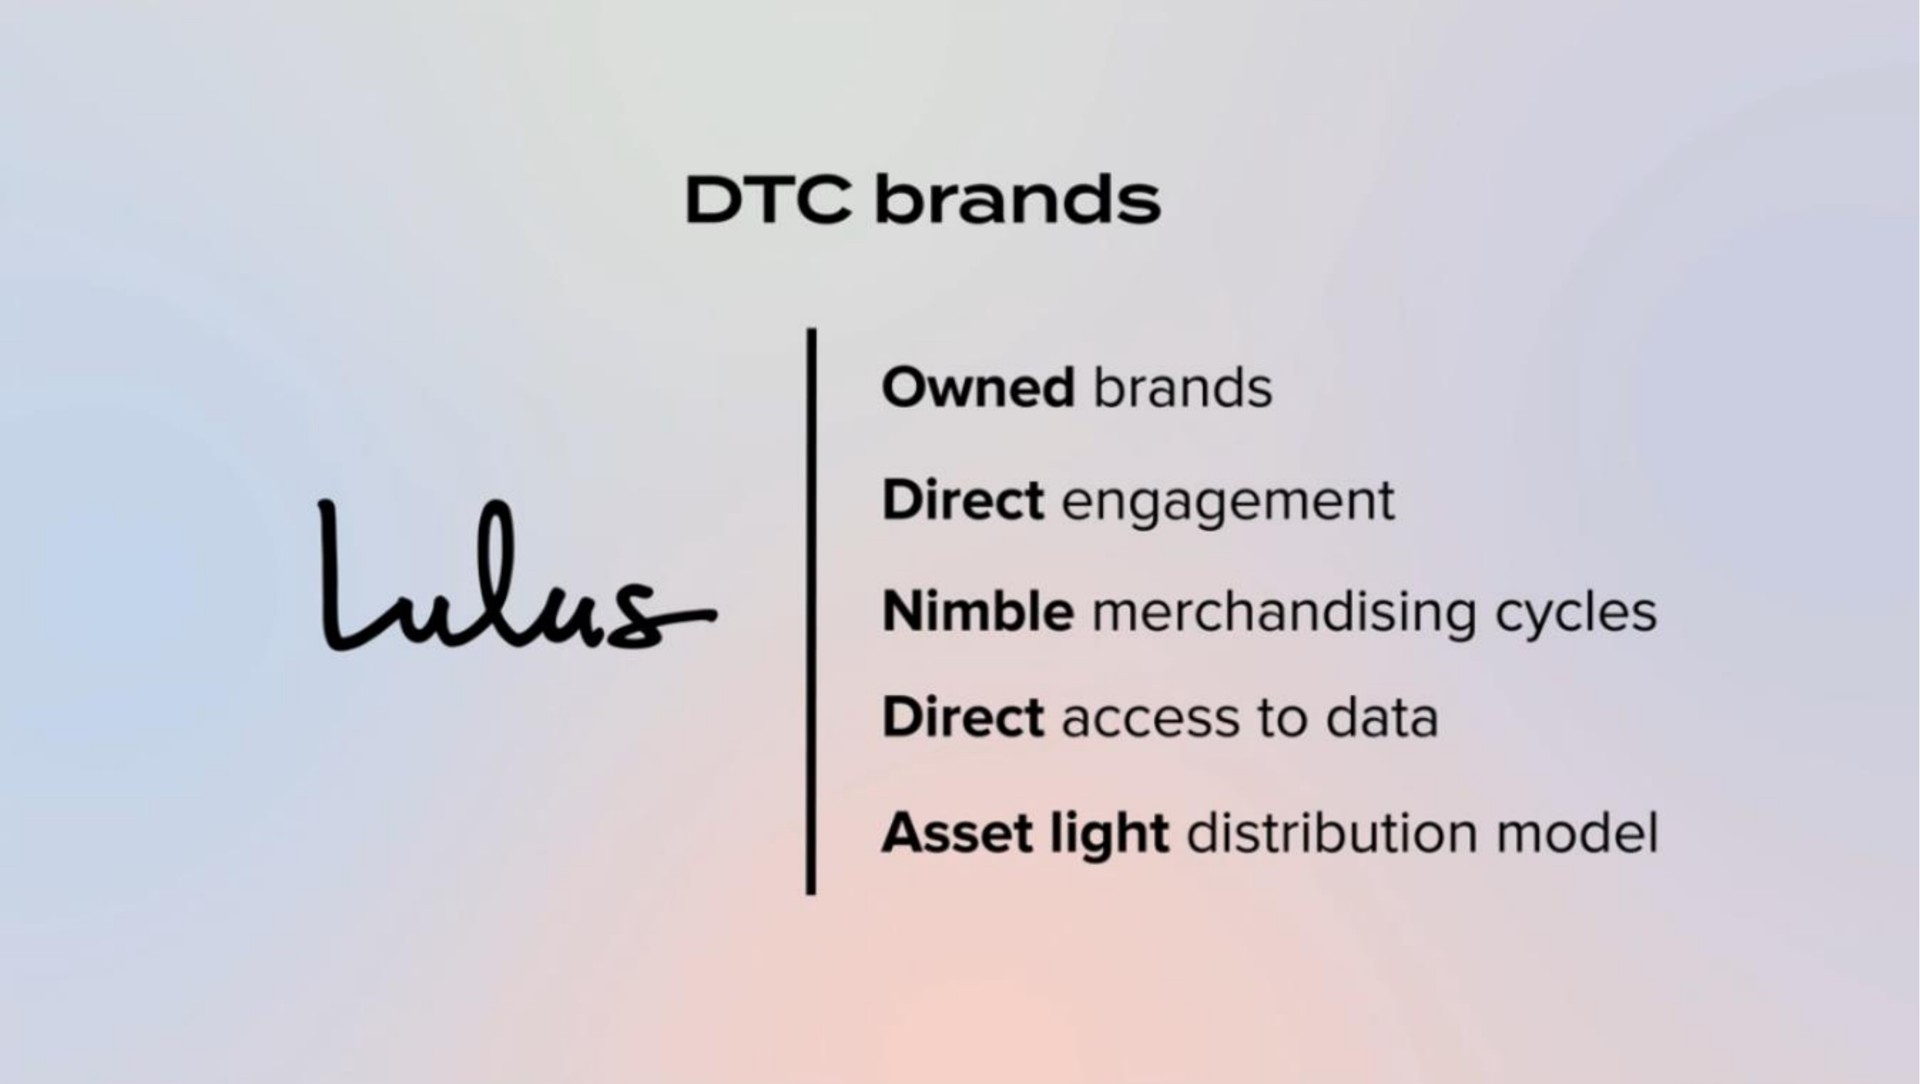 brands direct engagement nimble merchandising cycles asset light distribution model | Lulus